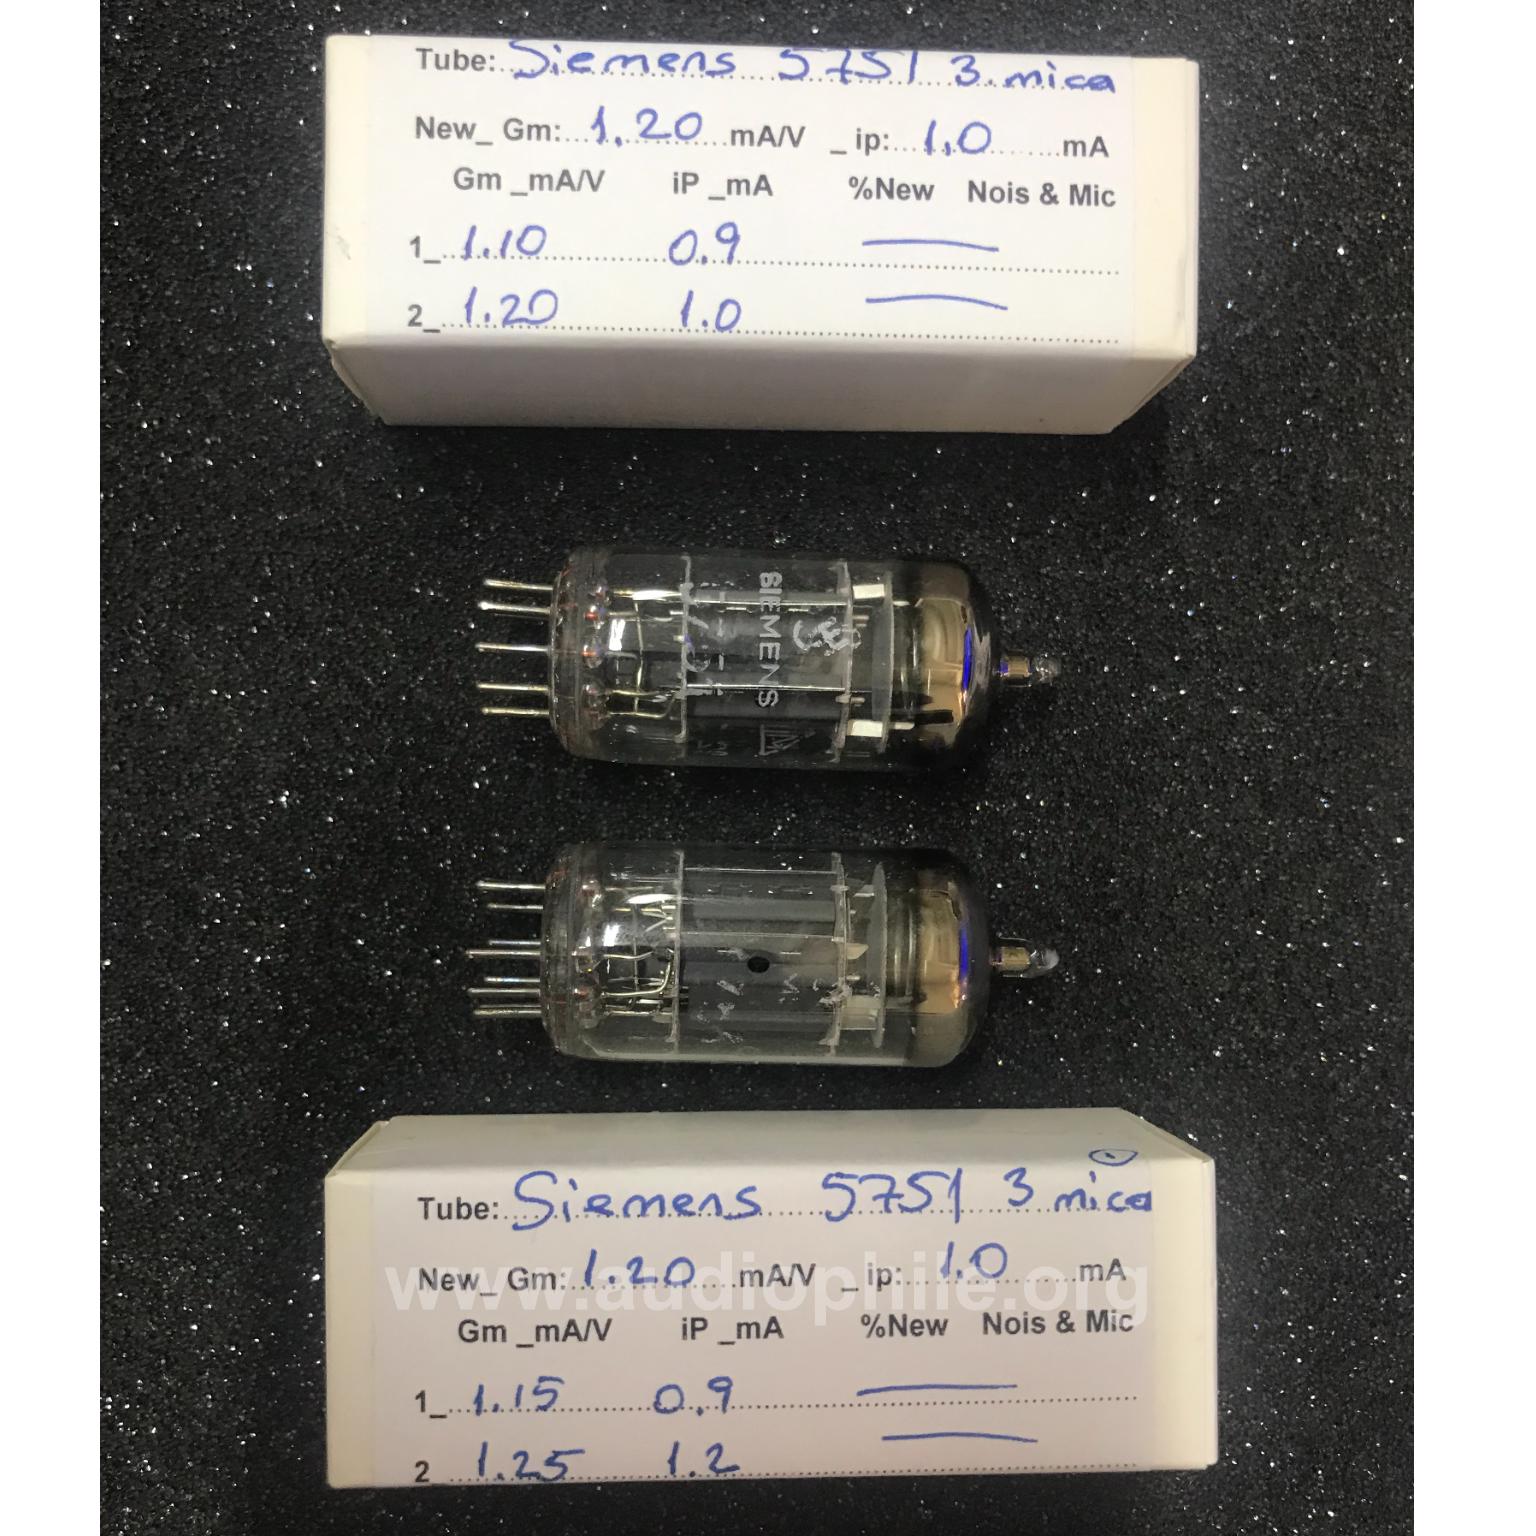 Siemens 5751 matched pair